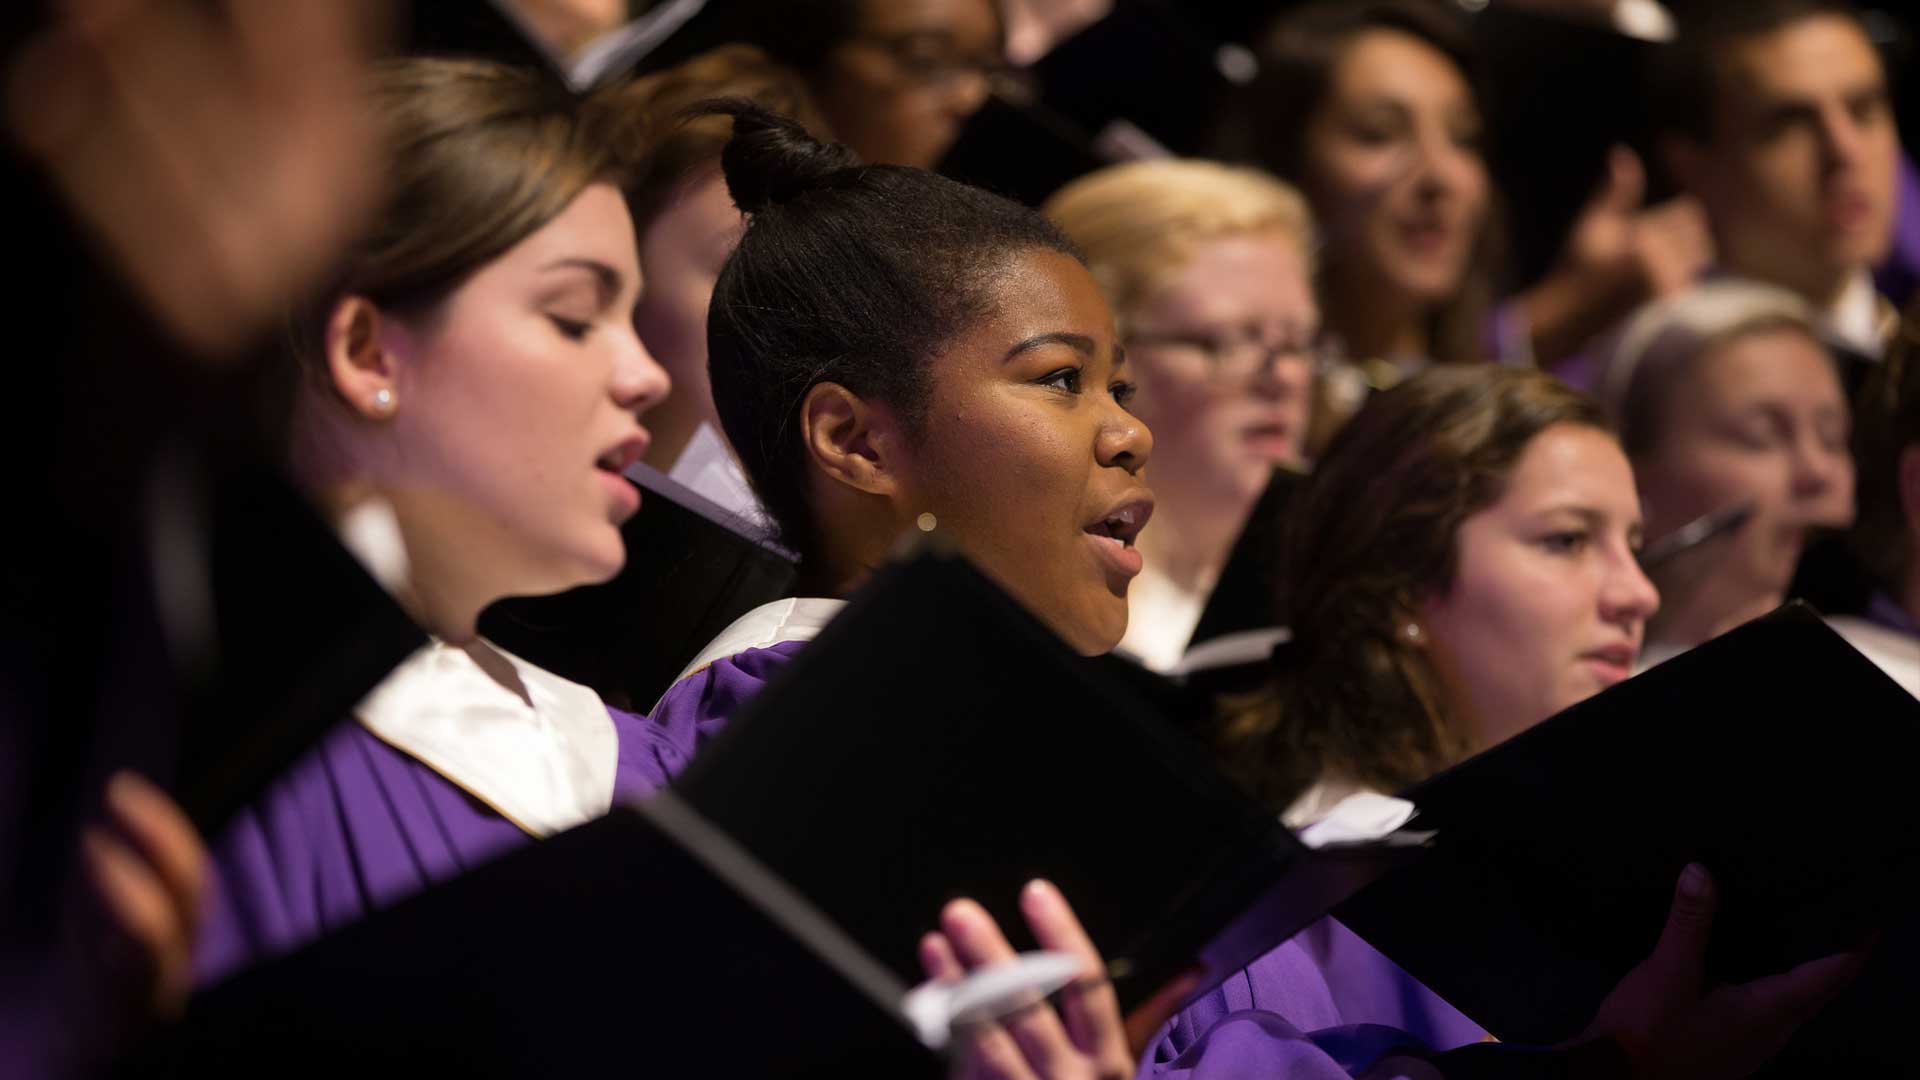 Chorus of men and women in purple robes